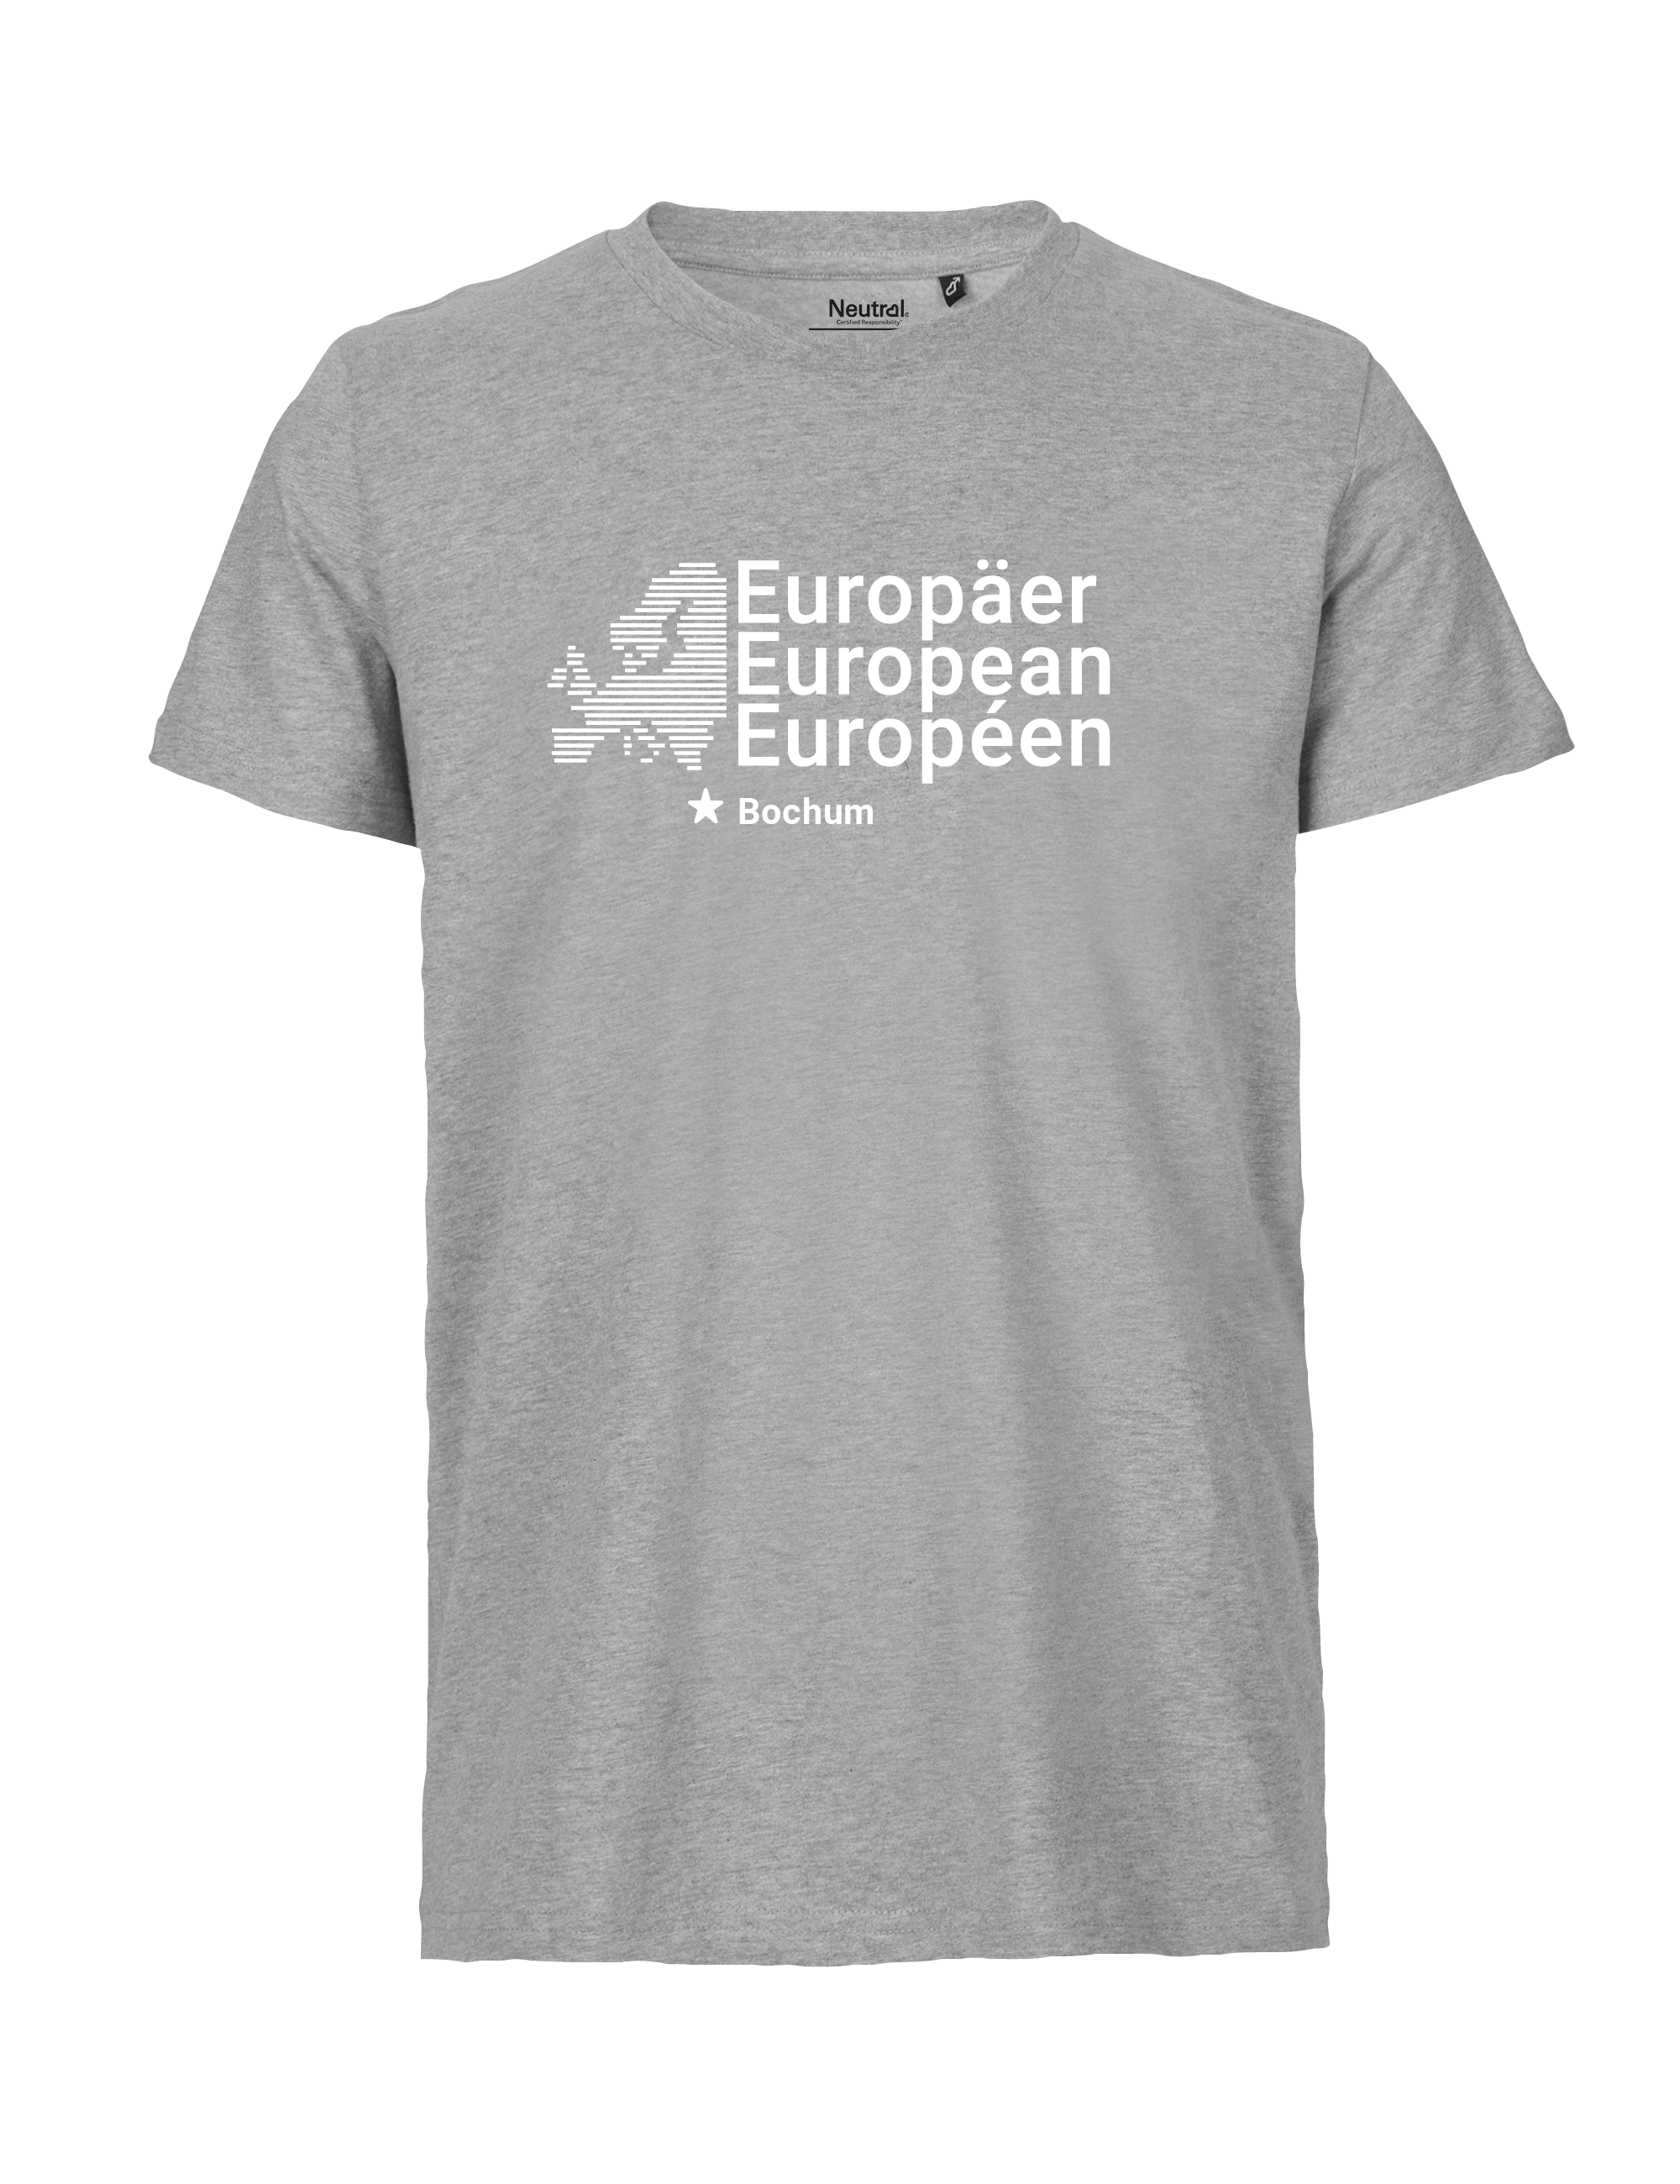 Europe-Emotions_Ansicht_Shirt_Bochum